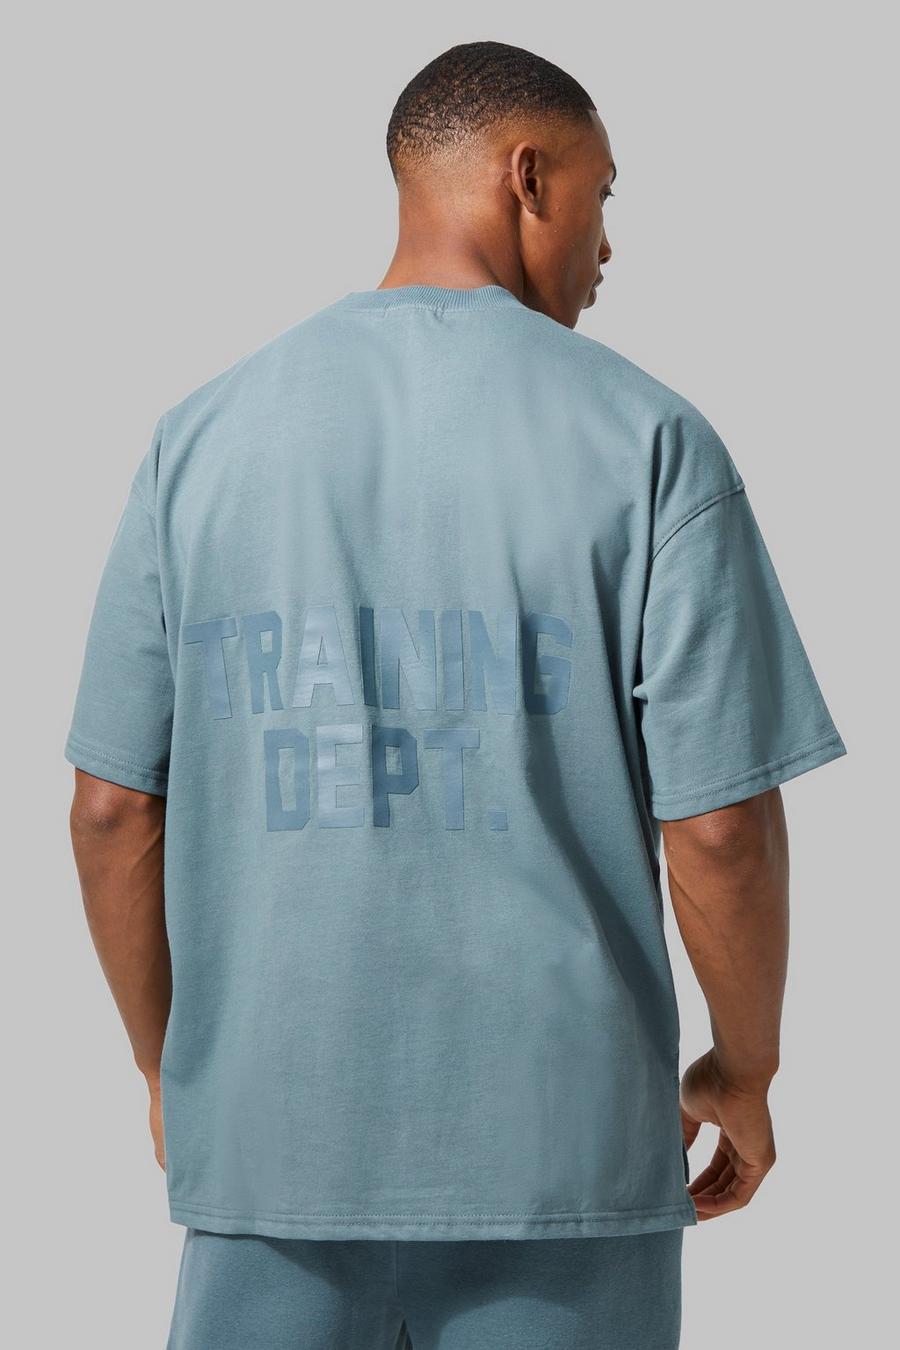 Slate blue Active Training Dept Oversized T-shirt